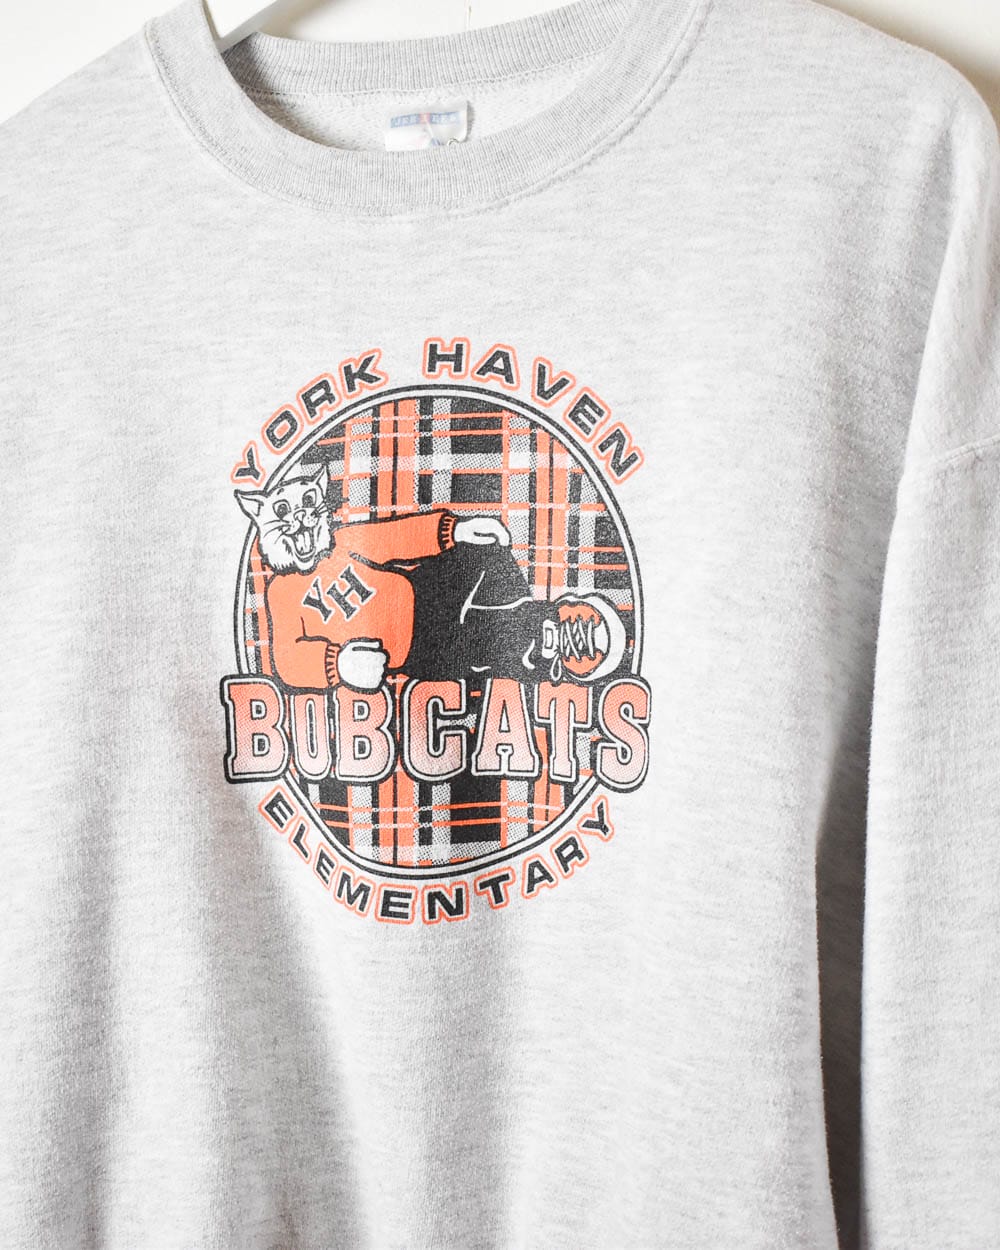 Stone York Haven Elementary Bobcats Sweatshirt - Small